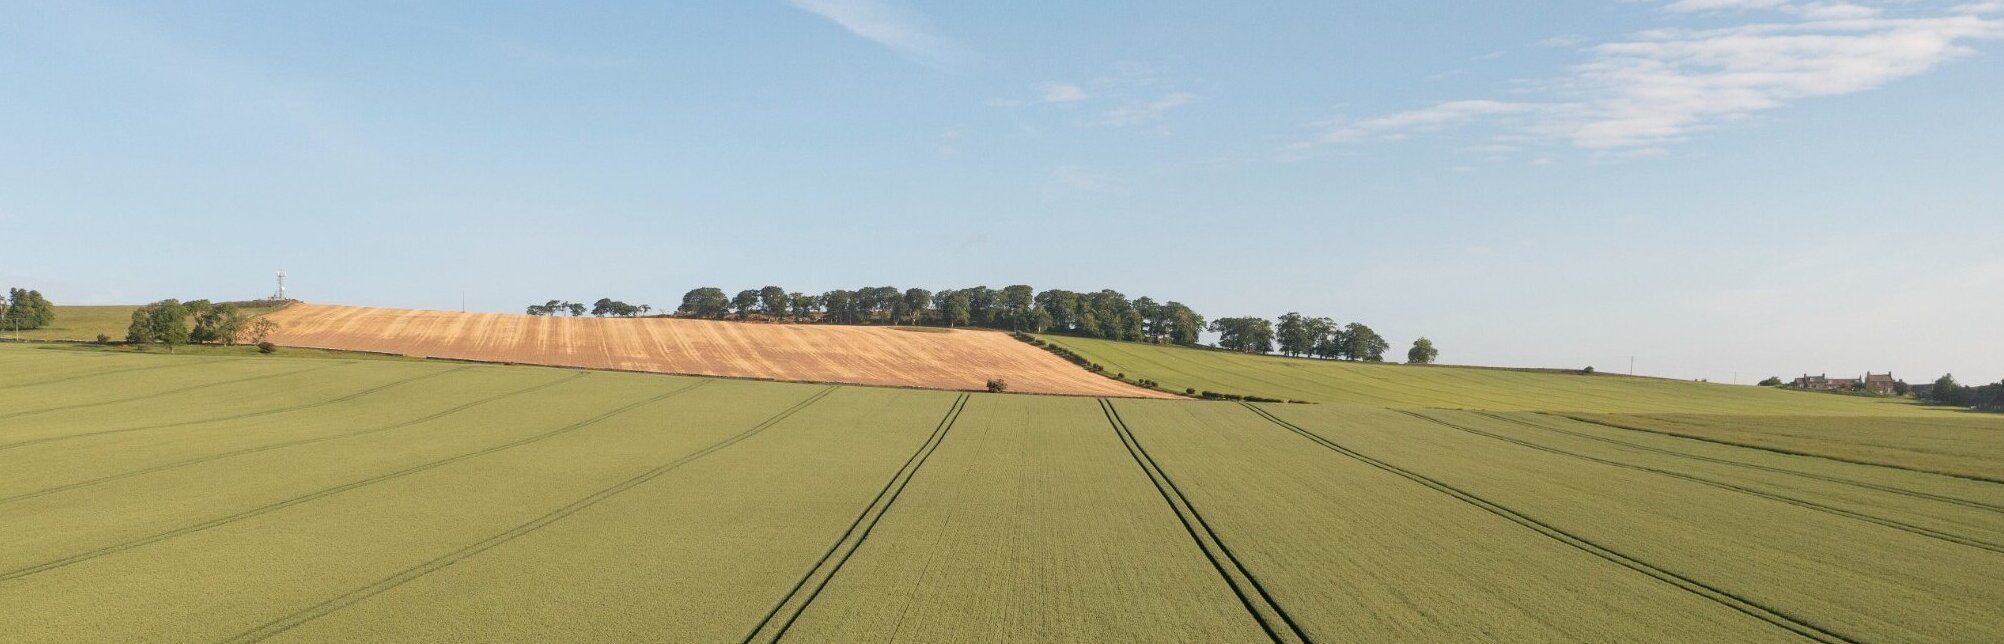 Amisfield Mains arable crop field.